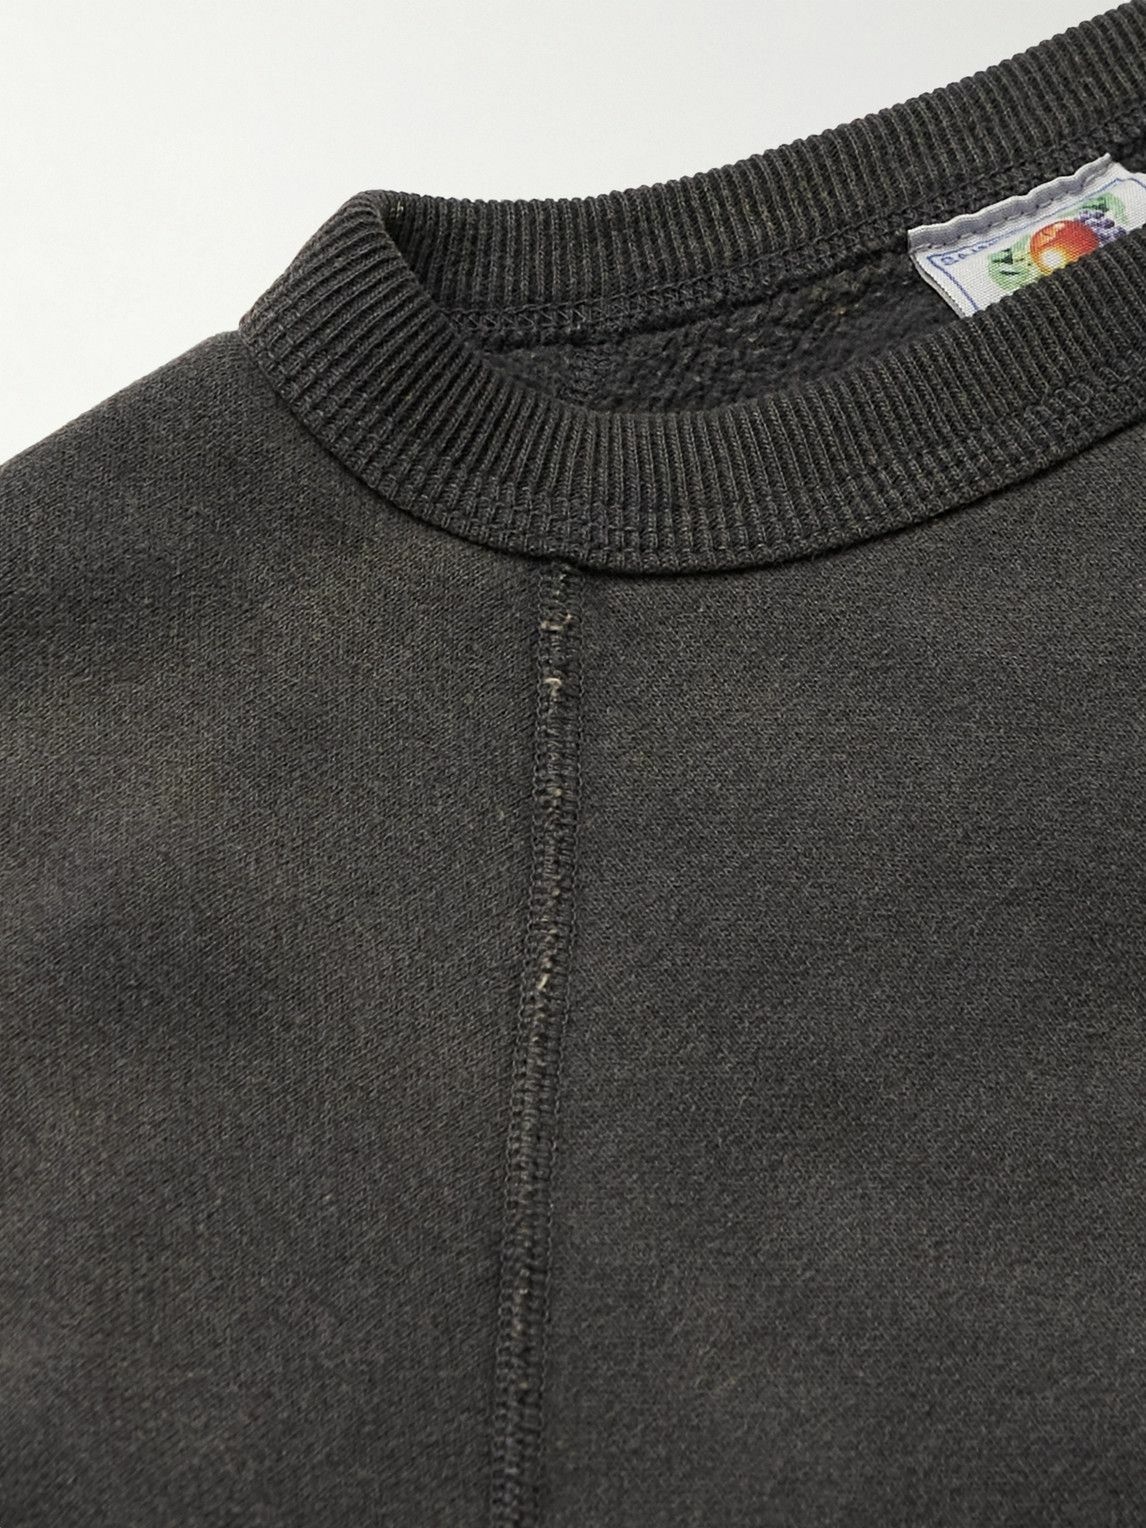 SAINT Mxxxxxx - Logo-Print Cotton-Jersey Sweatshirt - Black